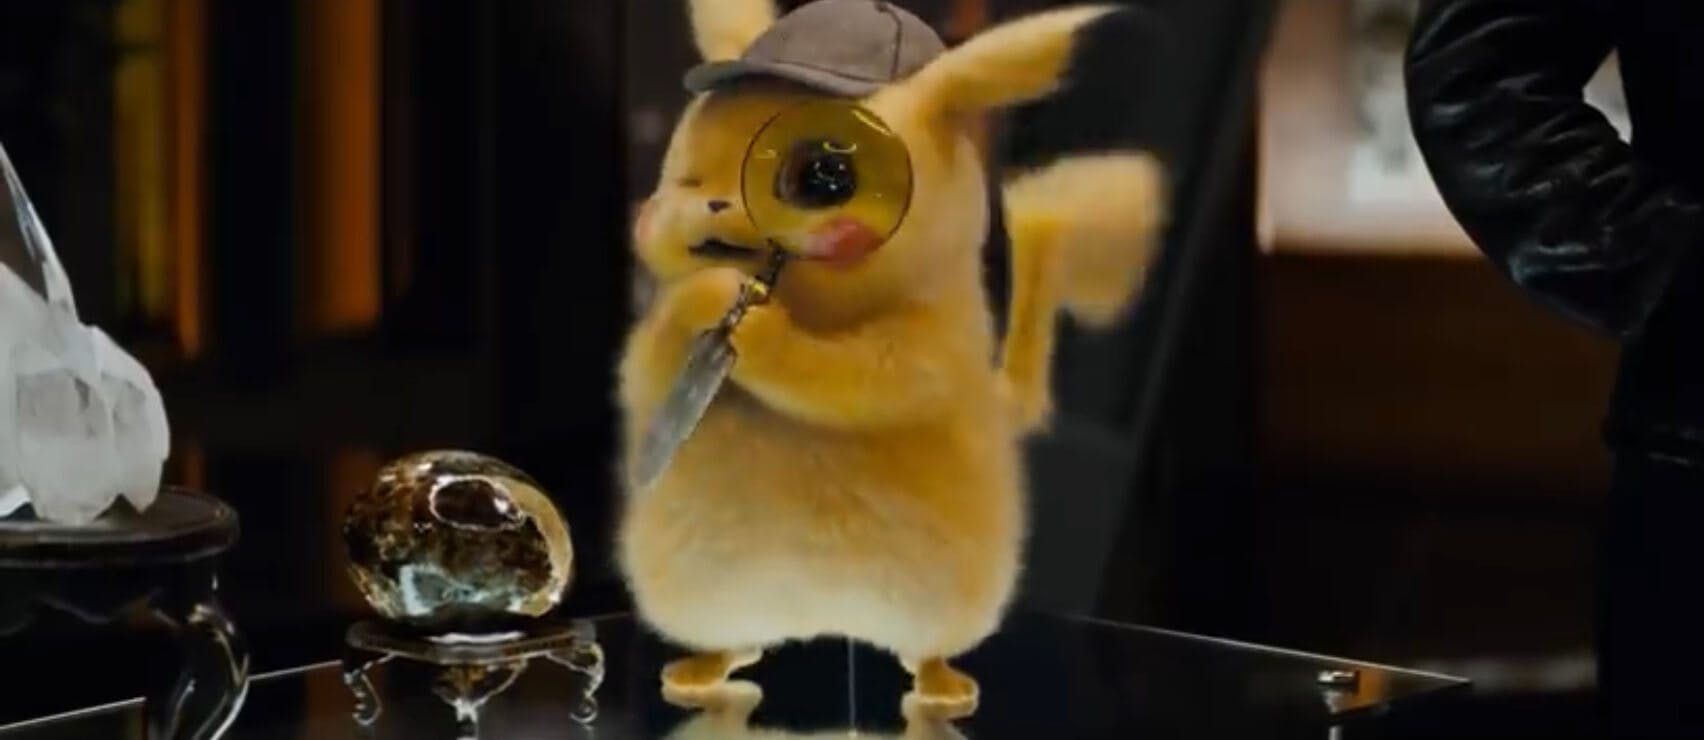 hbogo_best_movies_Detective_Pikachu